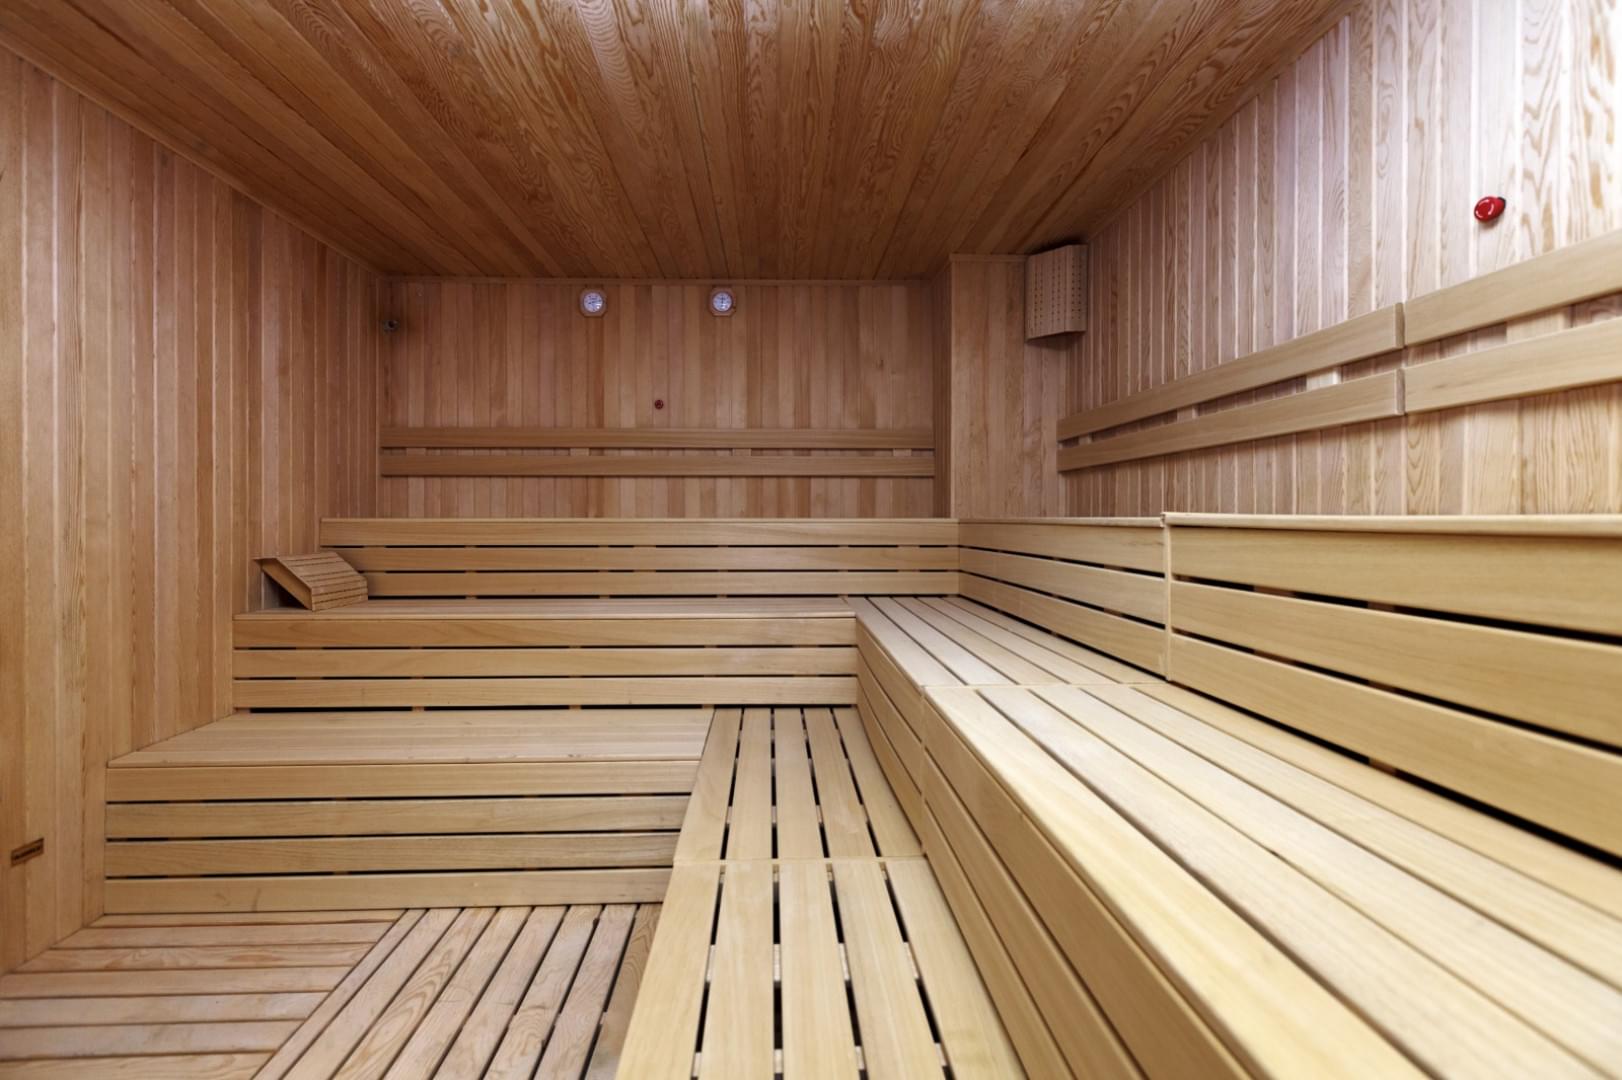 Sauna wood from Wood Ideas